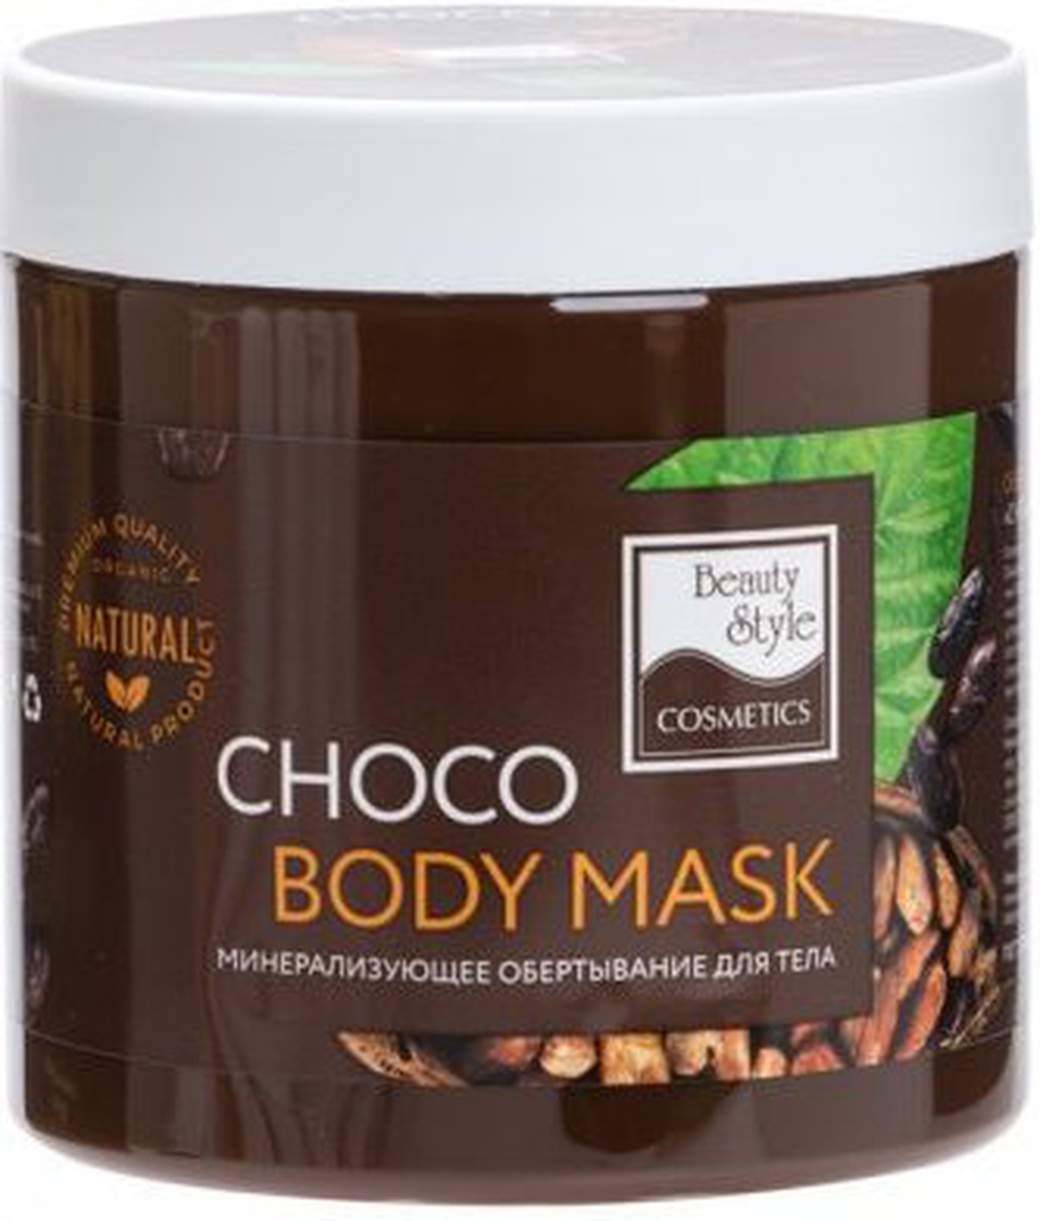 Обертывание минерализующее для тела Choco body mask 500 мл Beauty Style фото